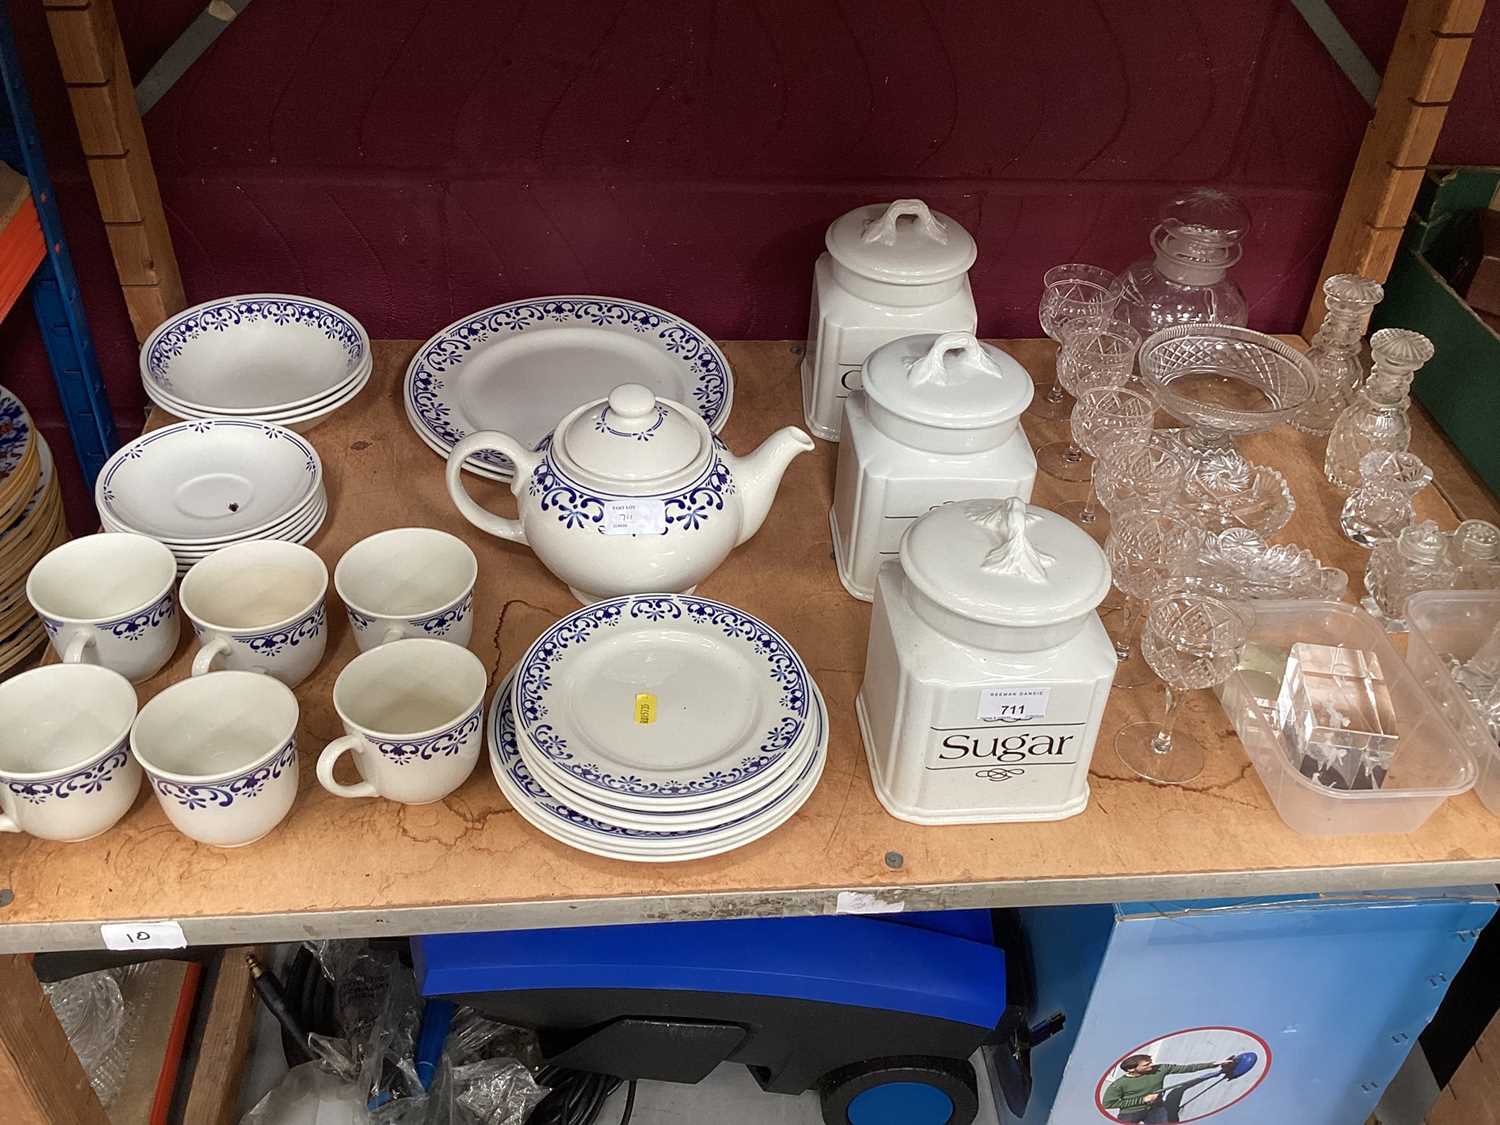 Selection of tea ware, glassware and storage jars (3 shelves)